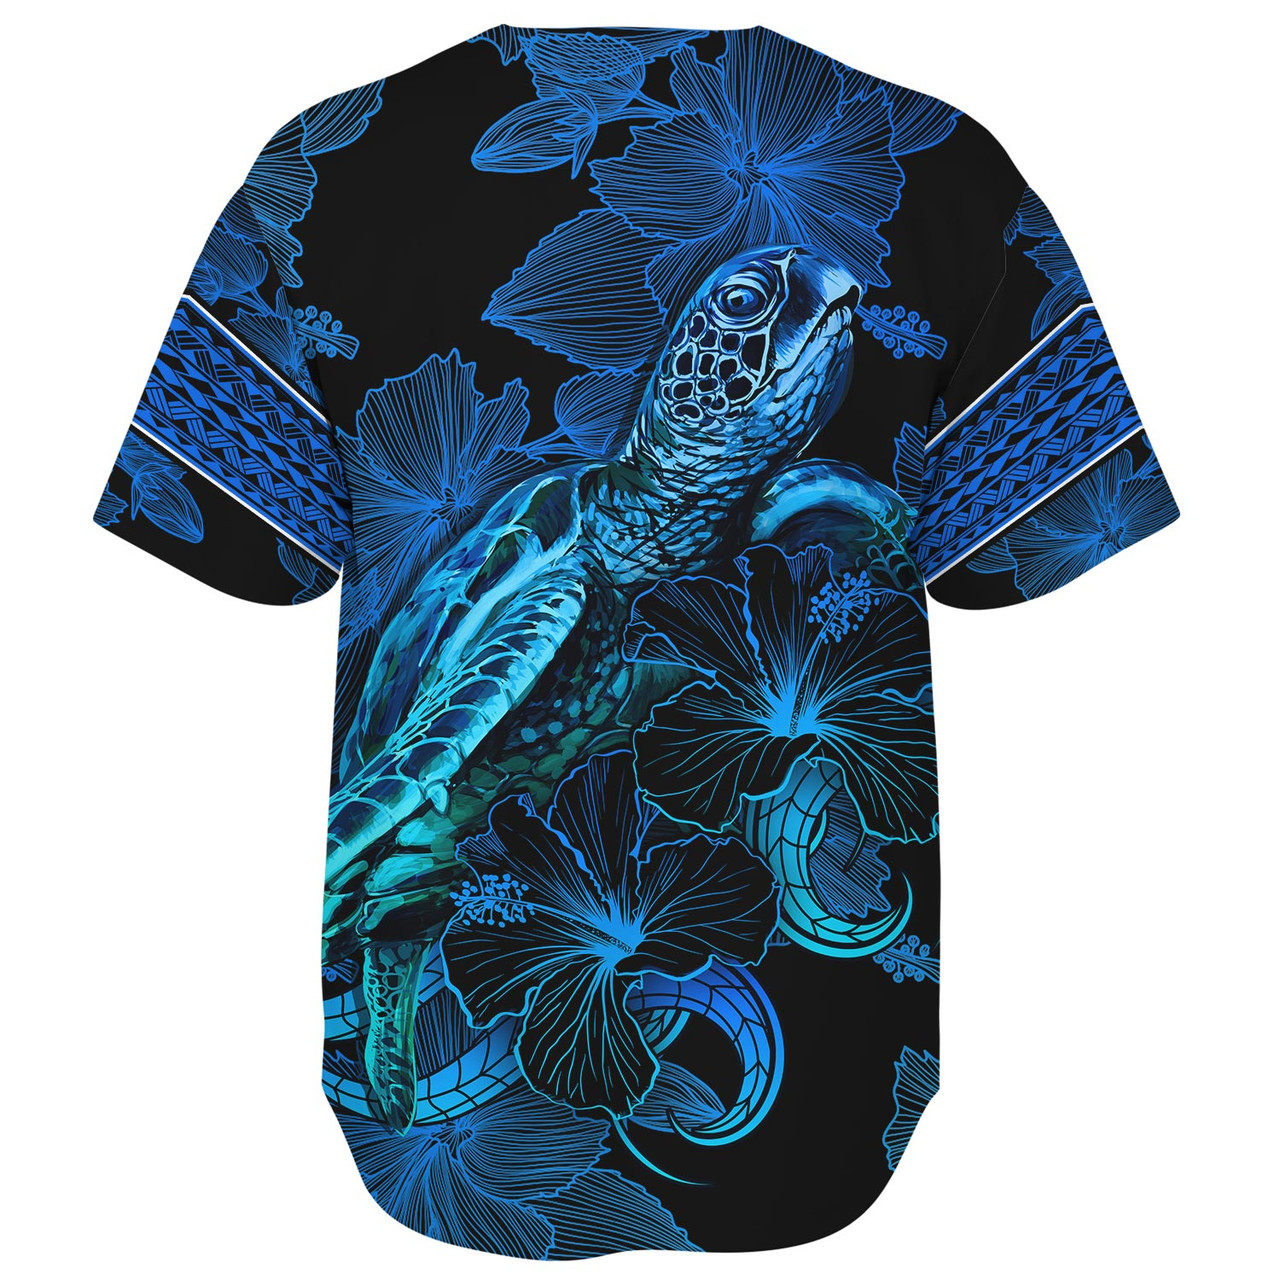 Samoa Baseball Shirt Sea Turtle With Blooming Hibiscus Flowers Tribal Blue